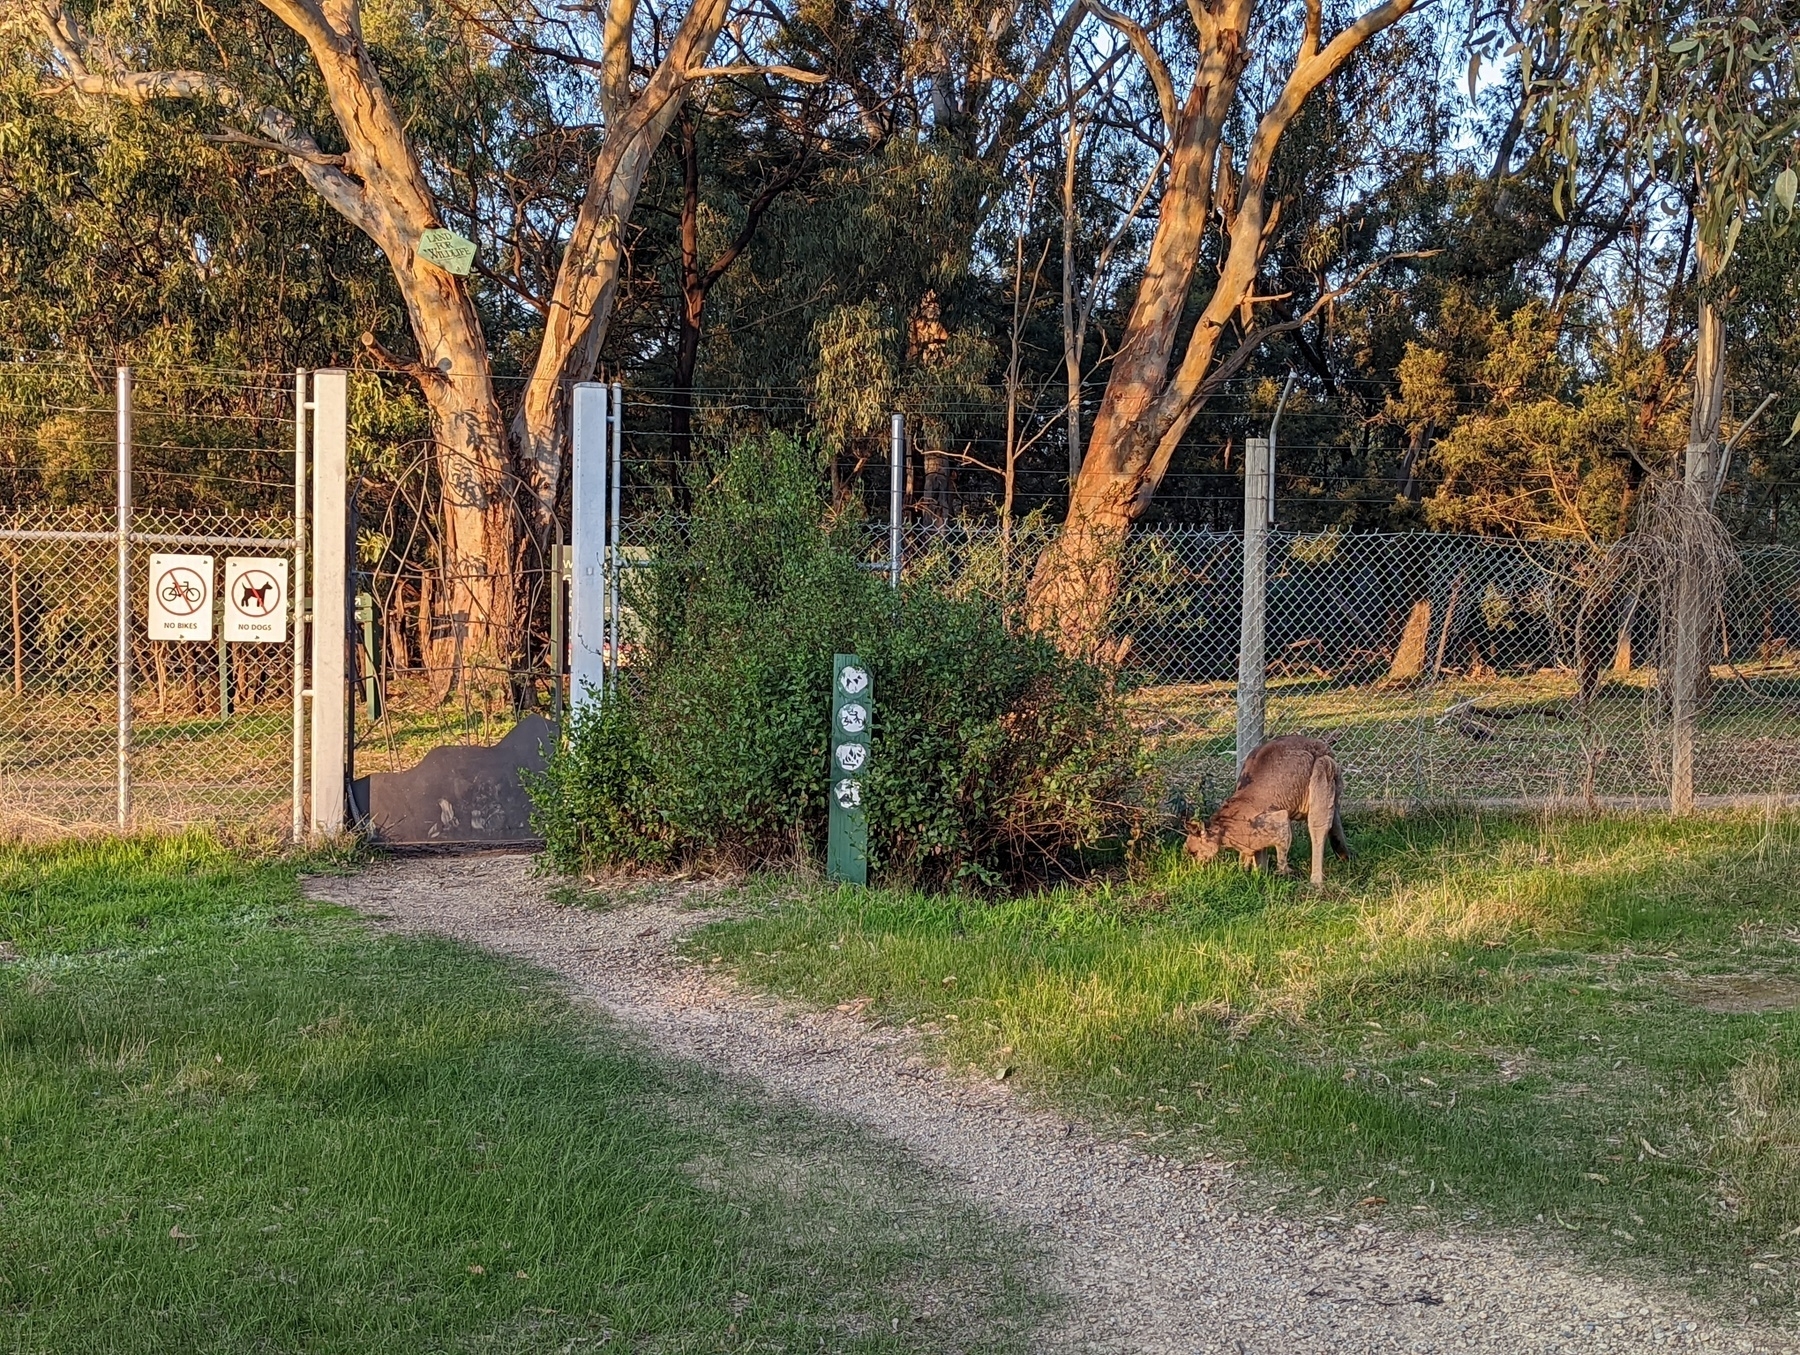 Kangaroo grazing a fence